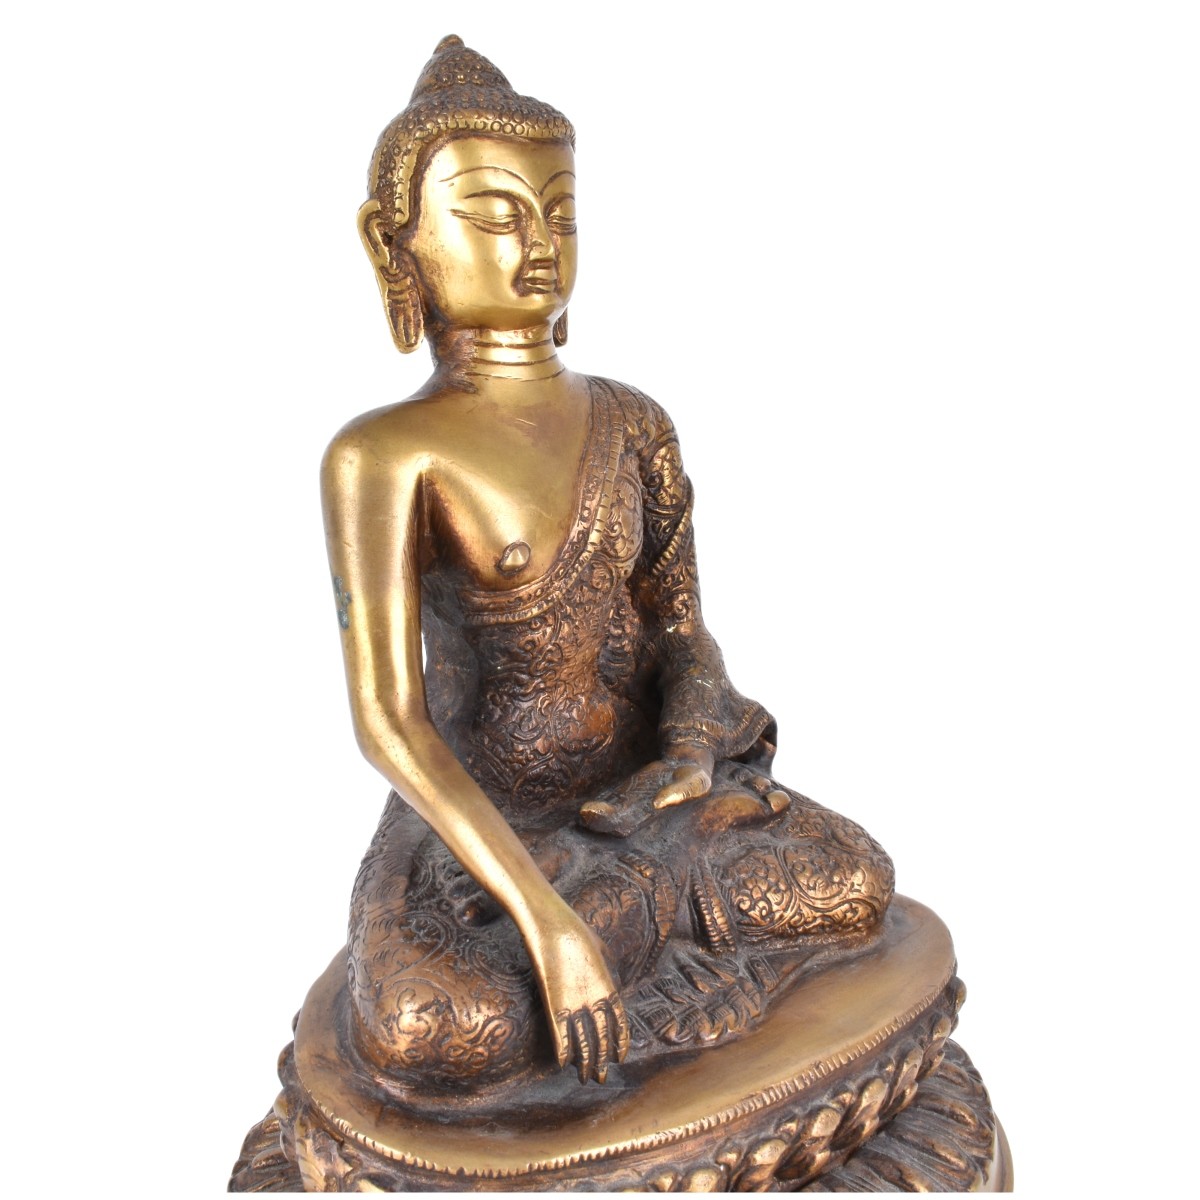 Three (3) Antique Thai Buddhist Figurines